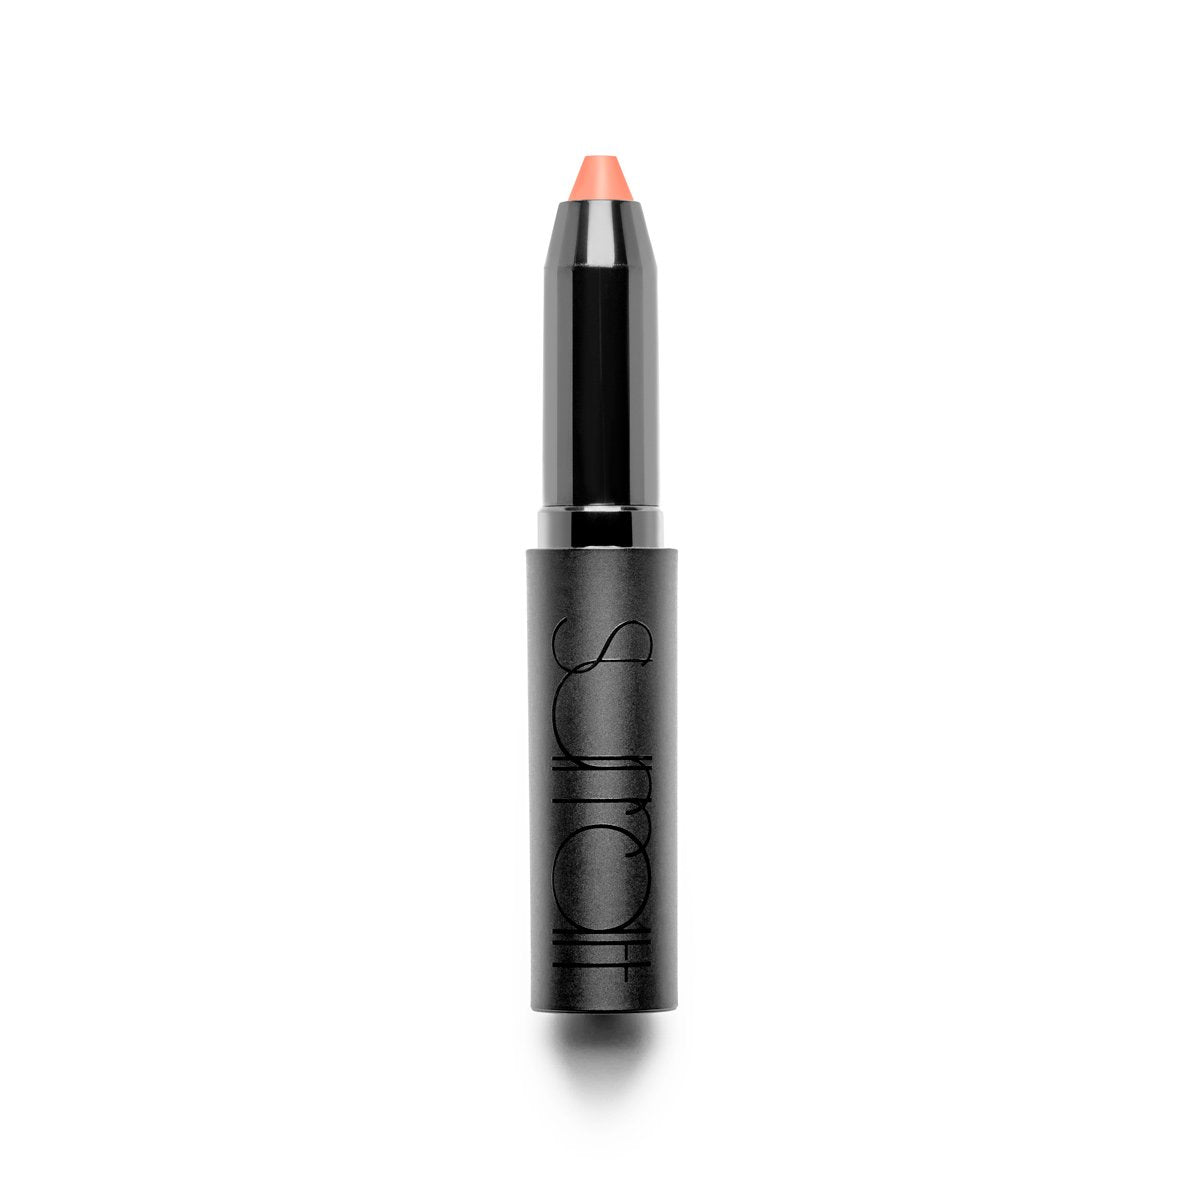 SCANTILLY CLAD - Warm Peach - long-wearing matte finish lipstick in warm peach shade